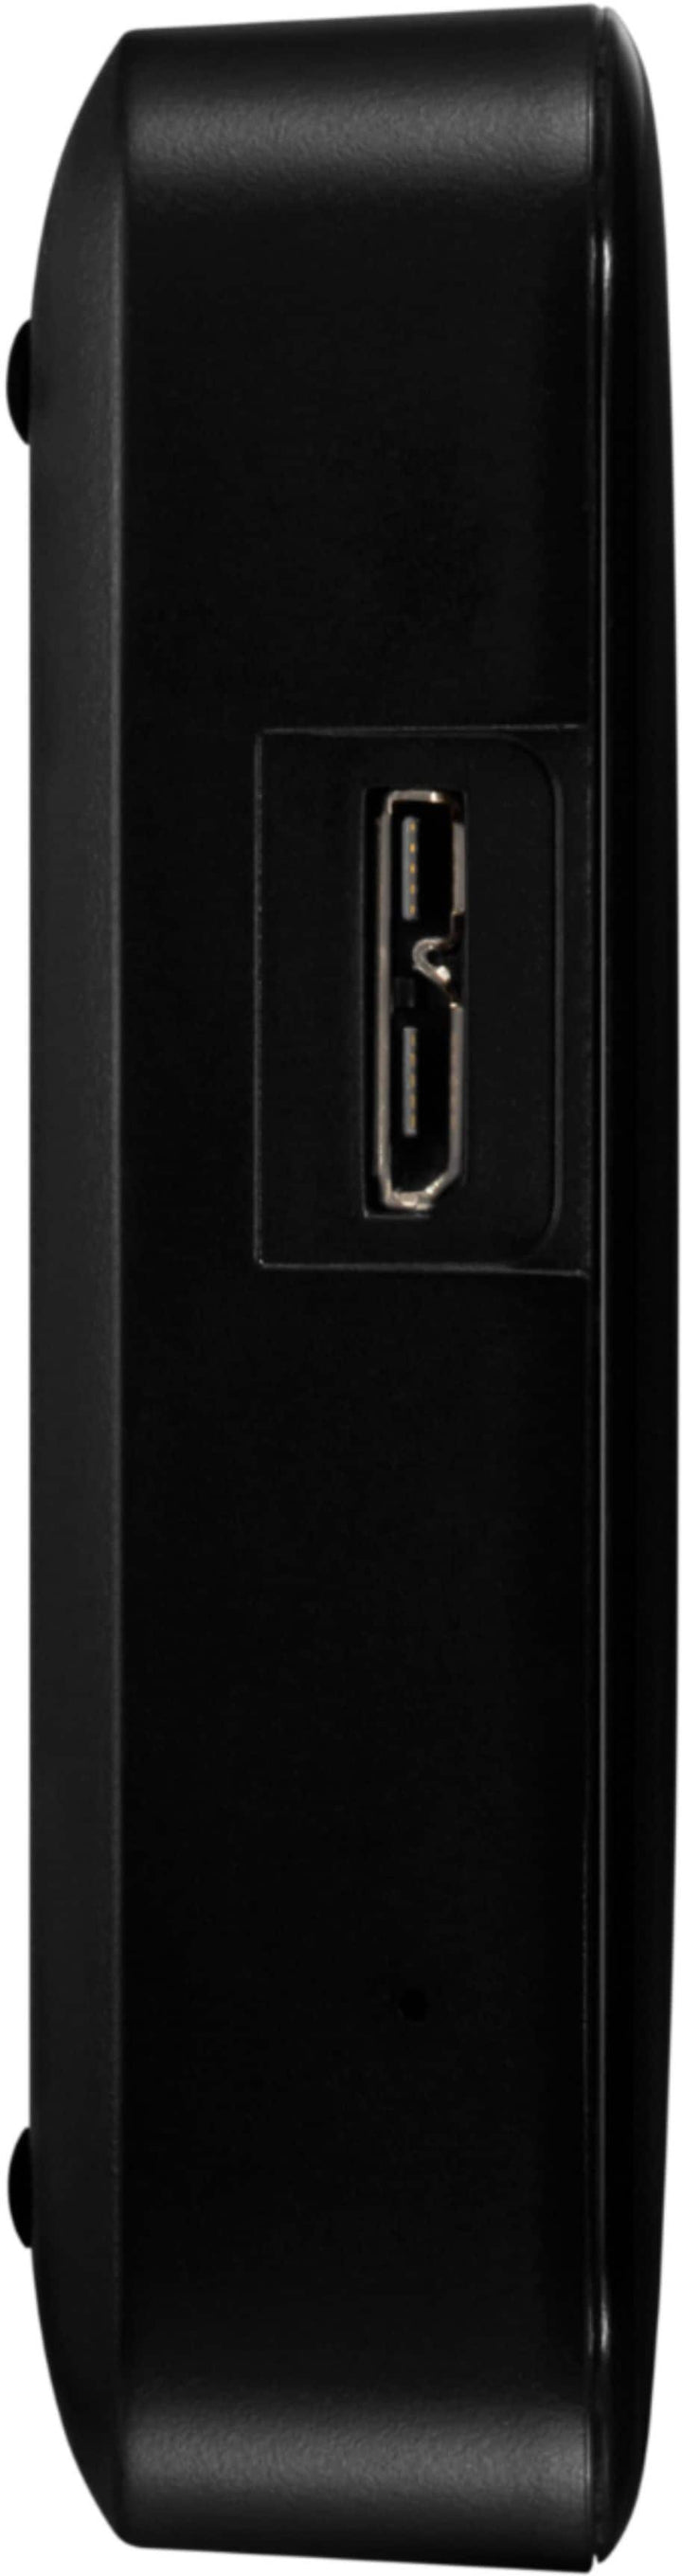 WD - Easystore 4TB External USB 3.0 Portable Hard Drive - Black_3